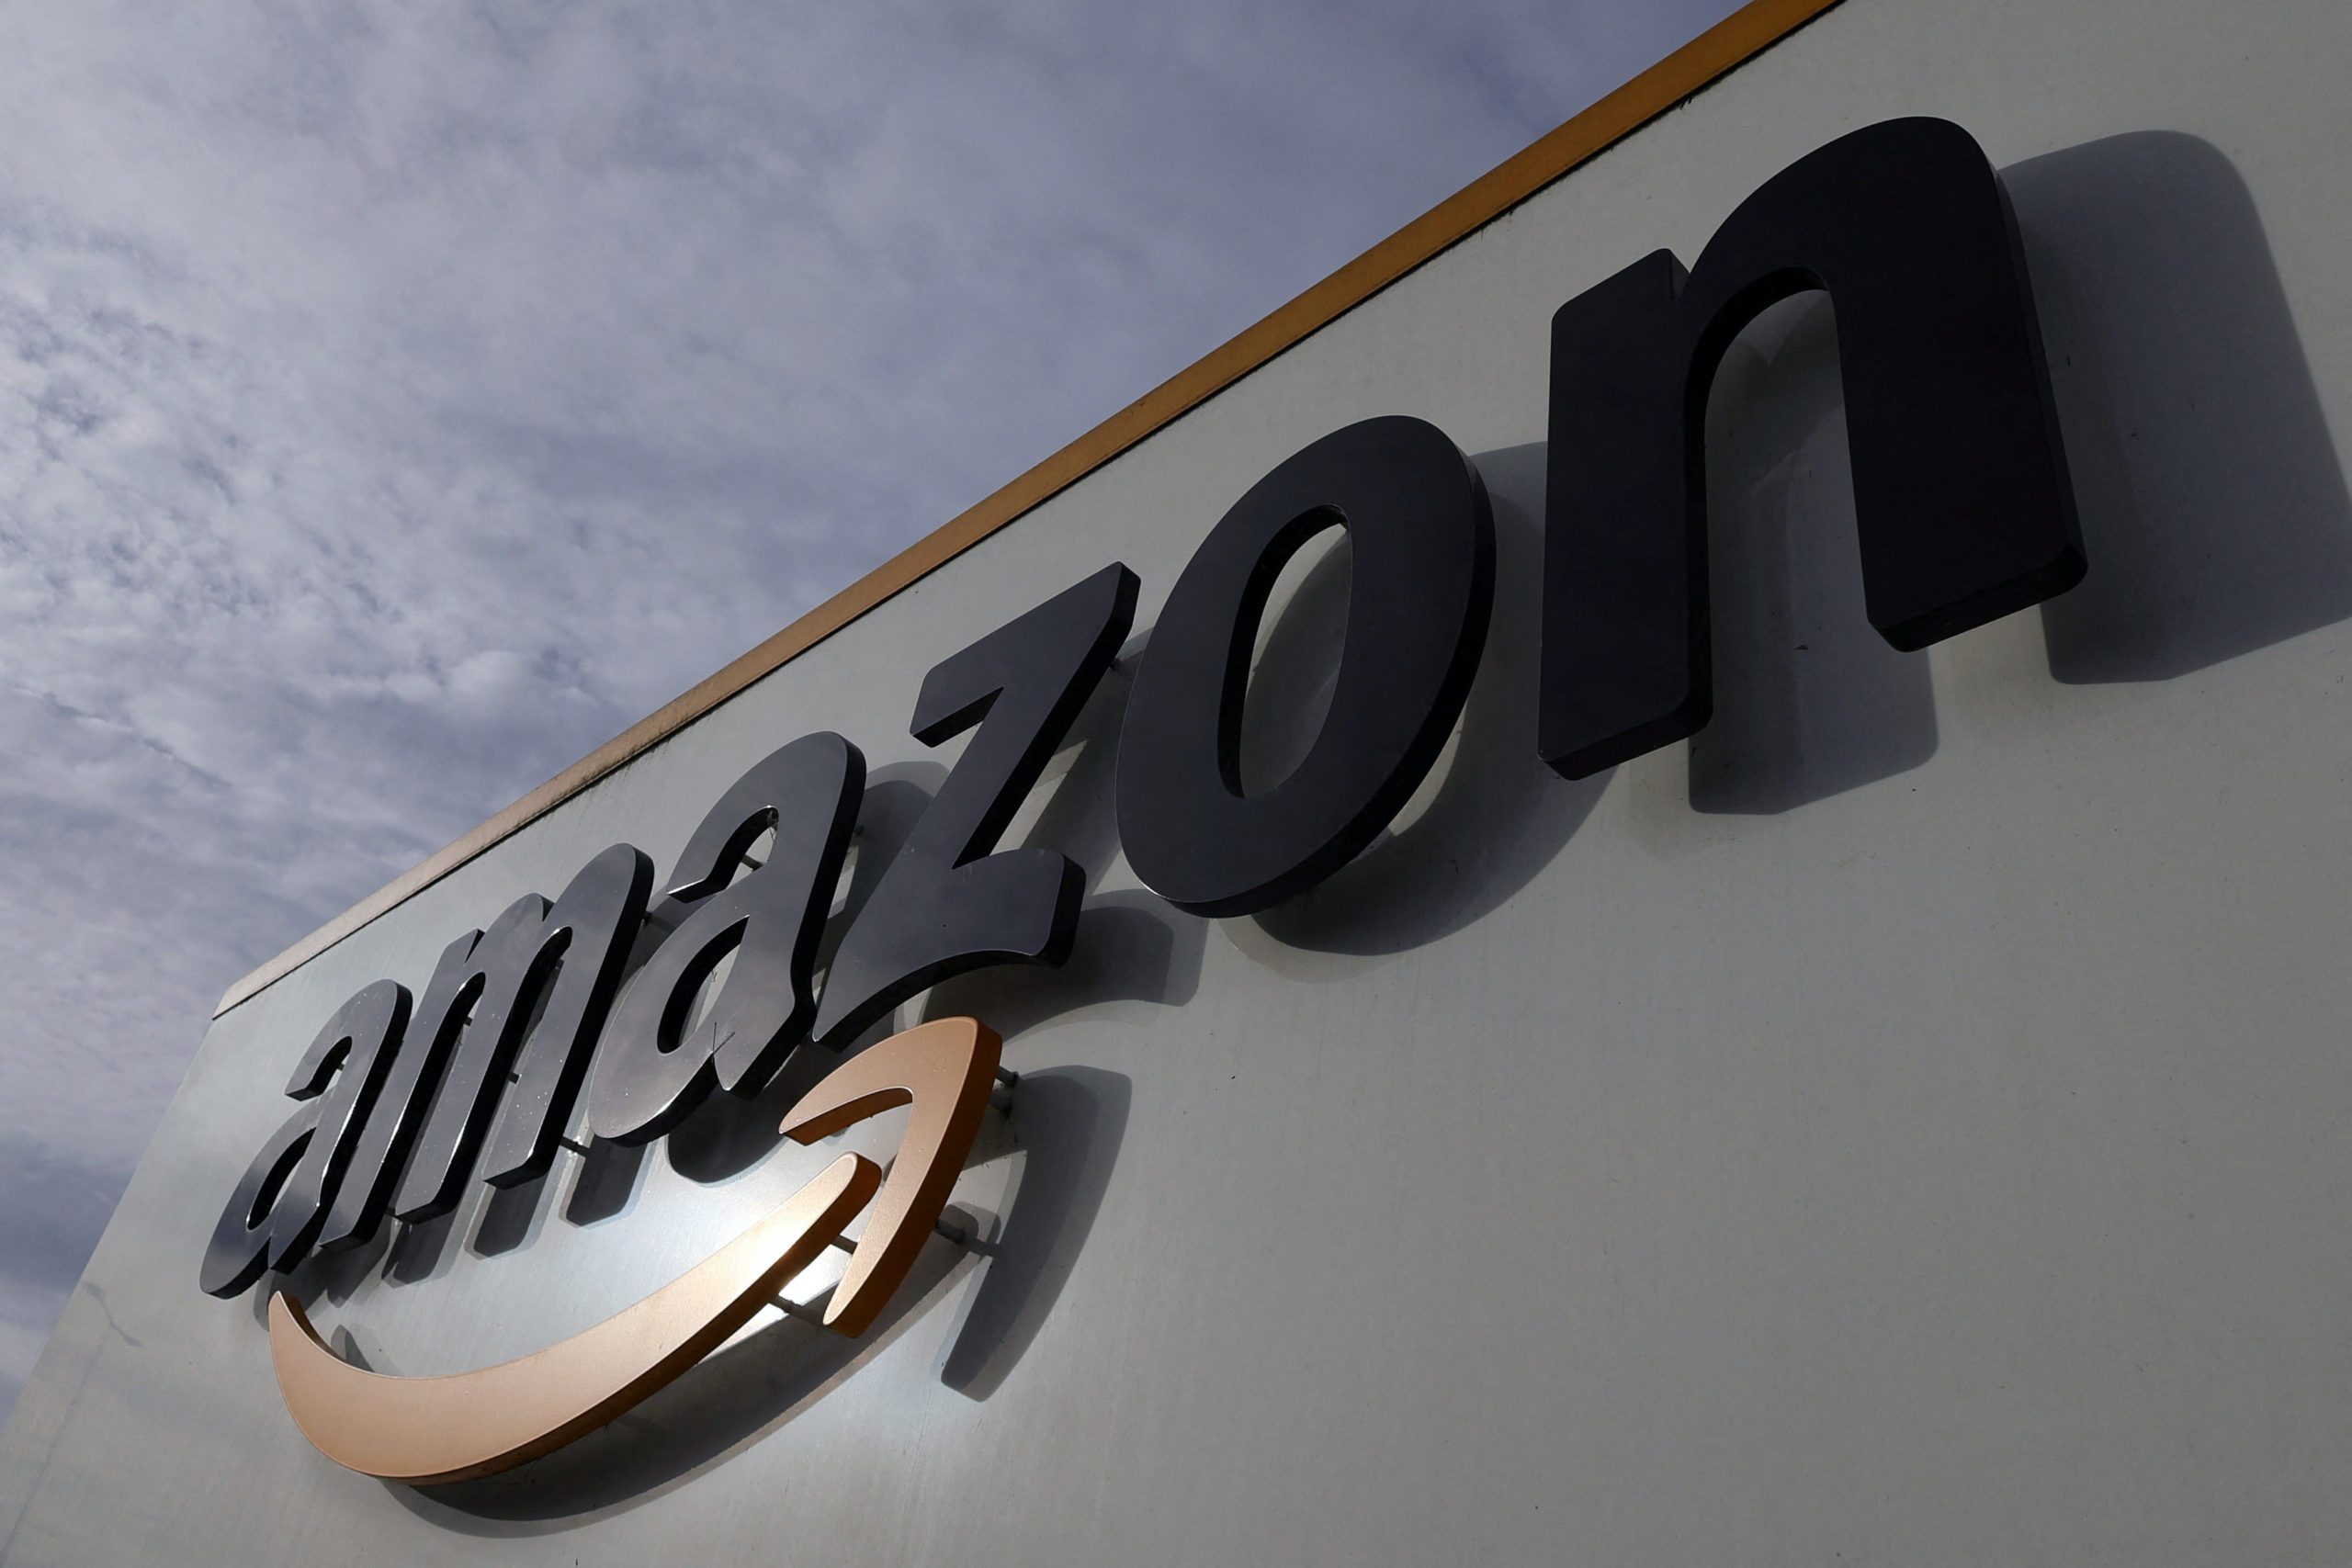 Amazon, Microsoft cloud services face antitrust probe in UK